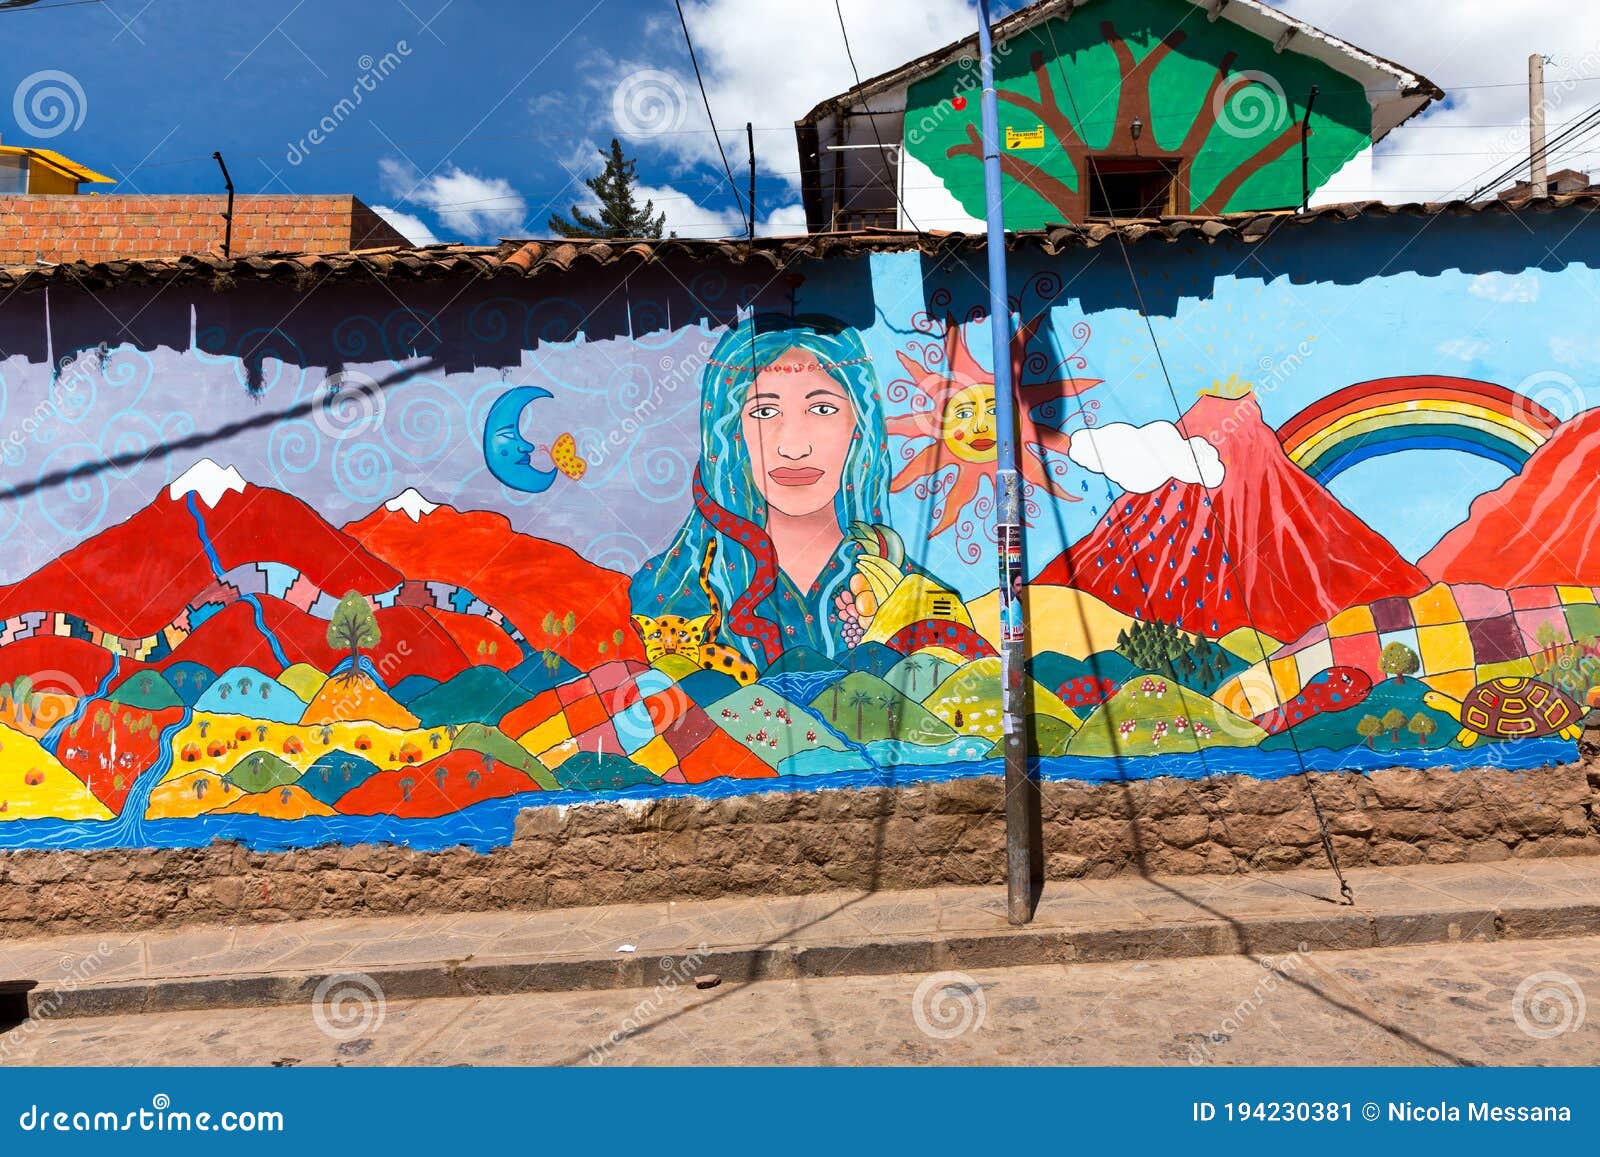 Graffiti De Pintura Urbana En Las Calles De Cusco Peru Foto editorial -  Imagen de pista, calle: 194230381